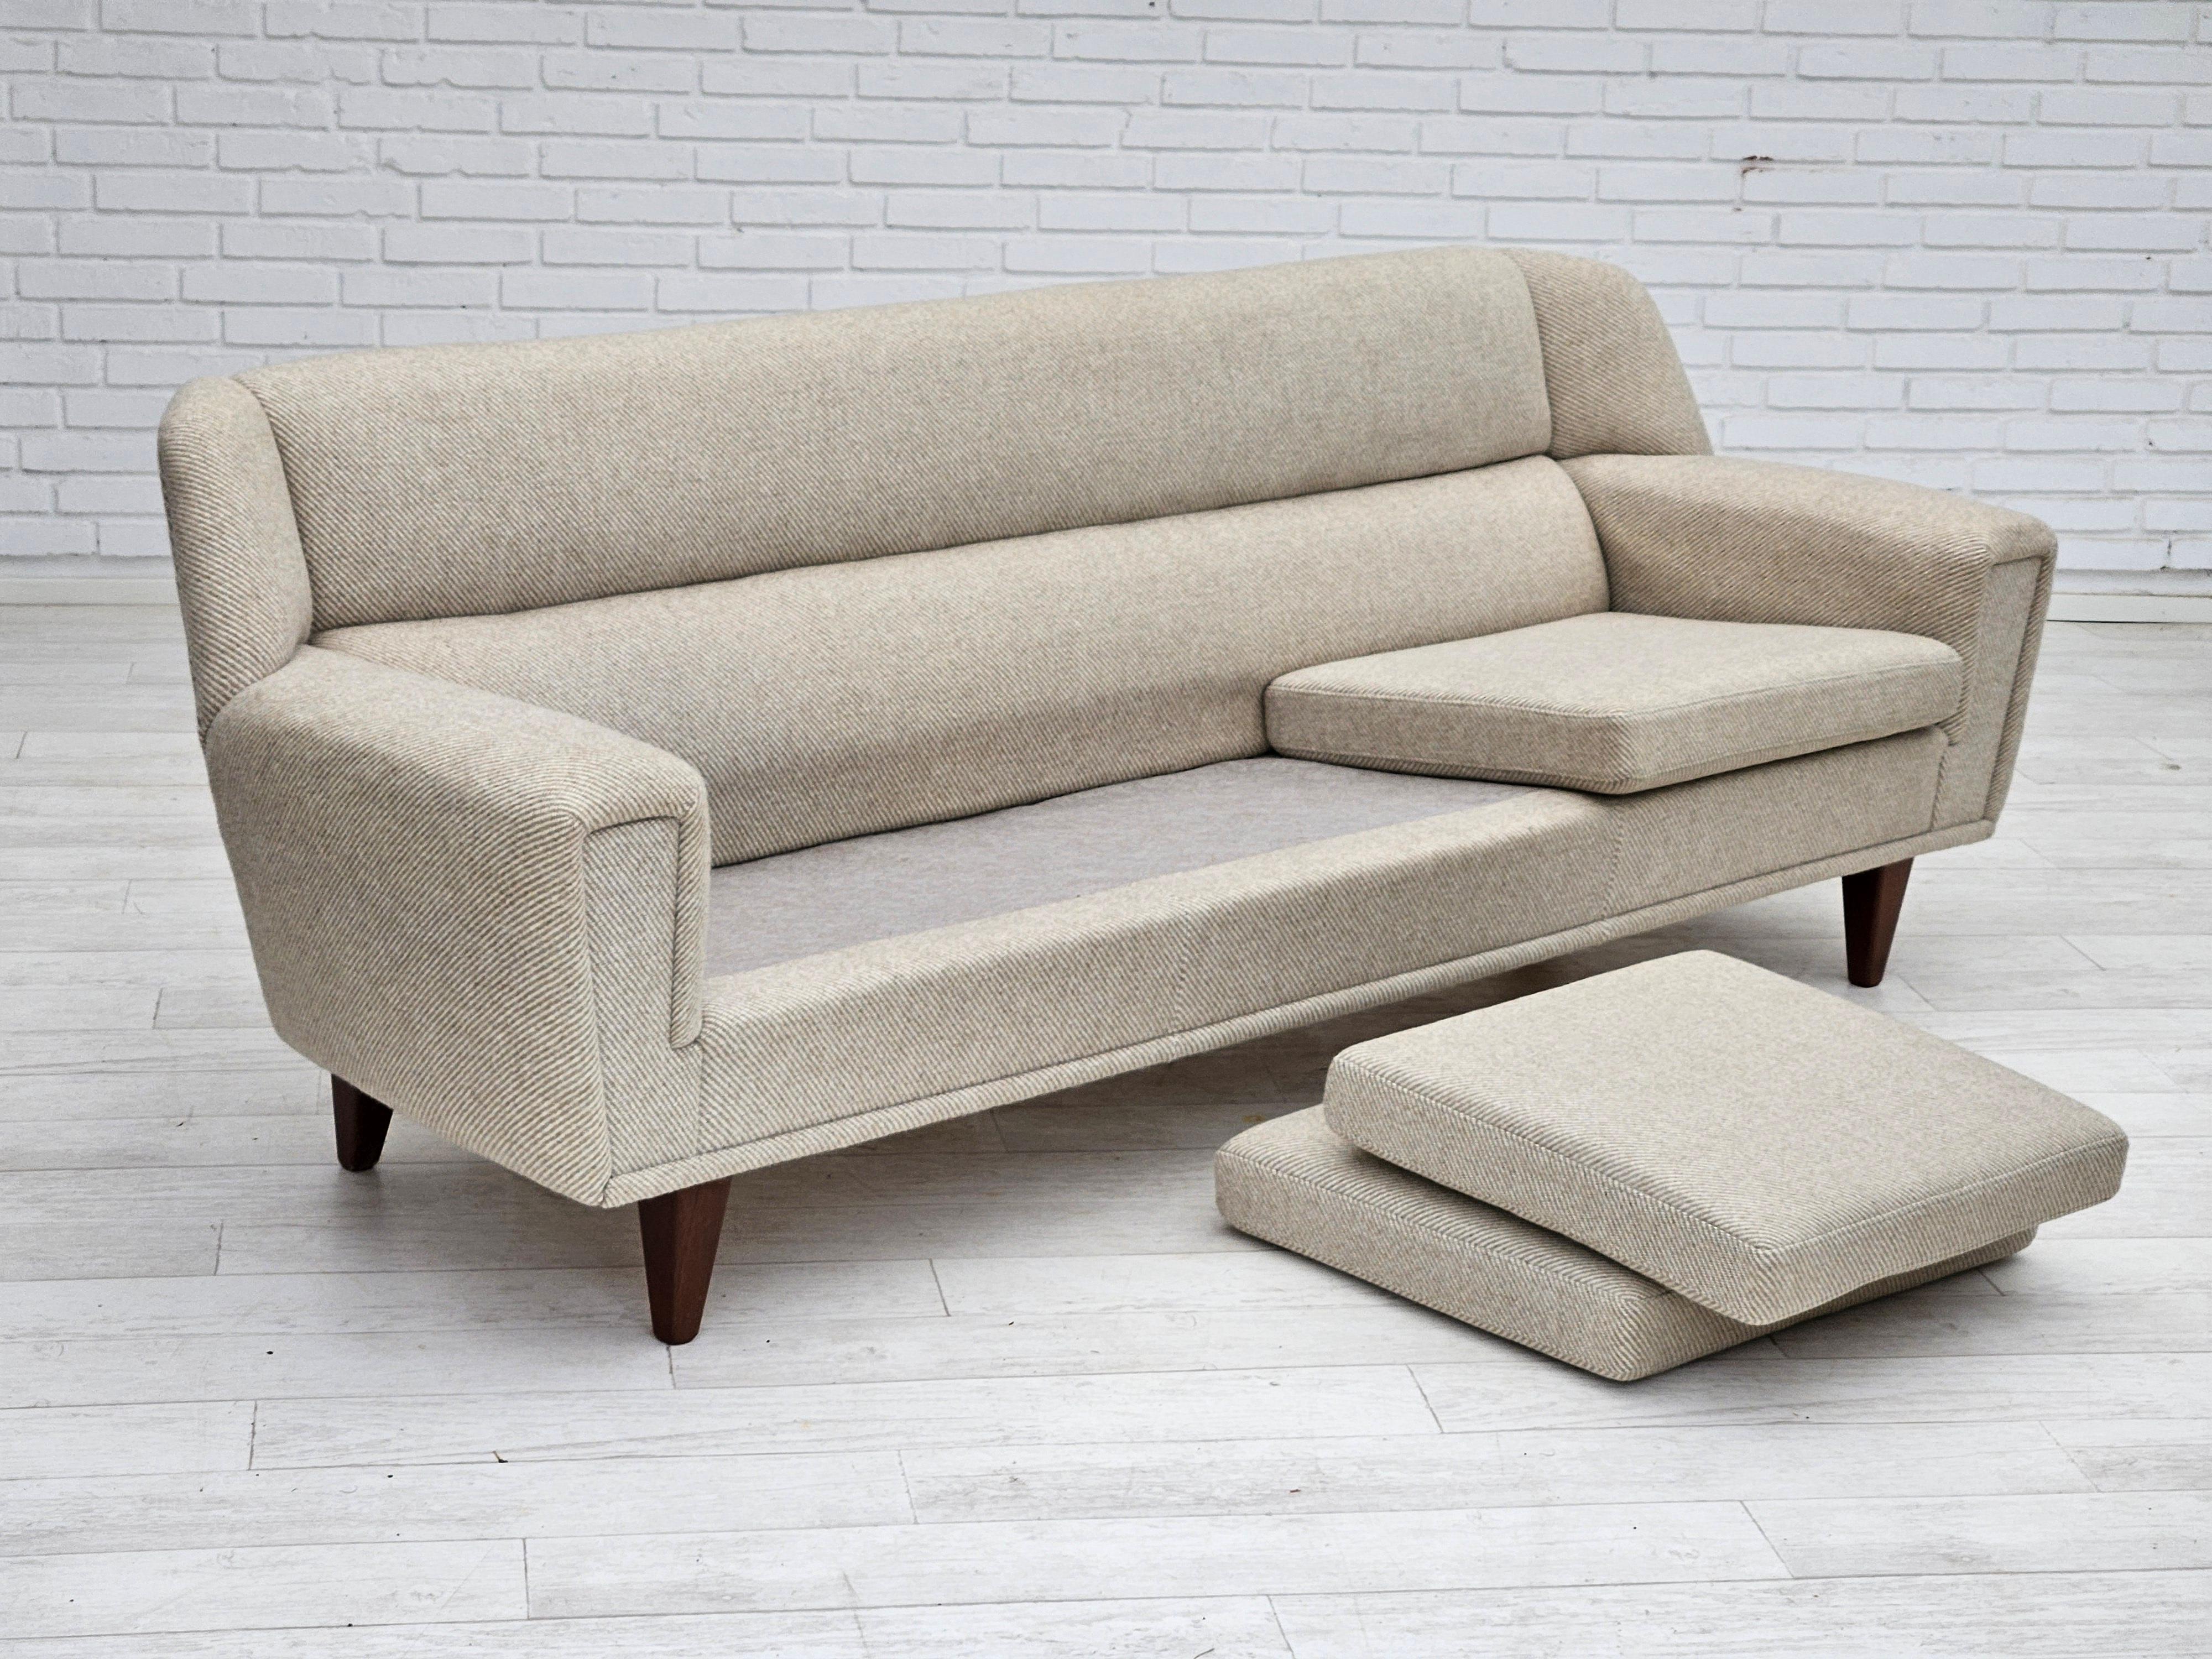 1960s, Danish design sofa by Kurt Østervig model 61, original good condition. 6